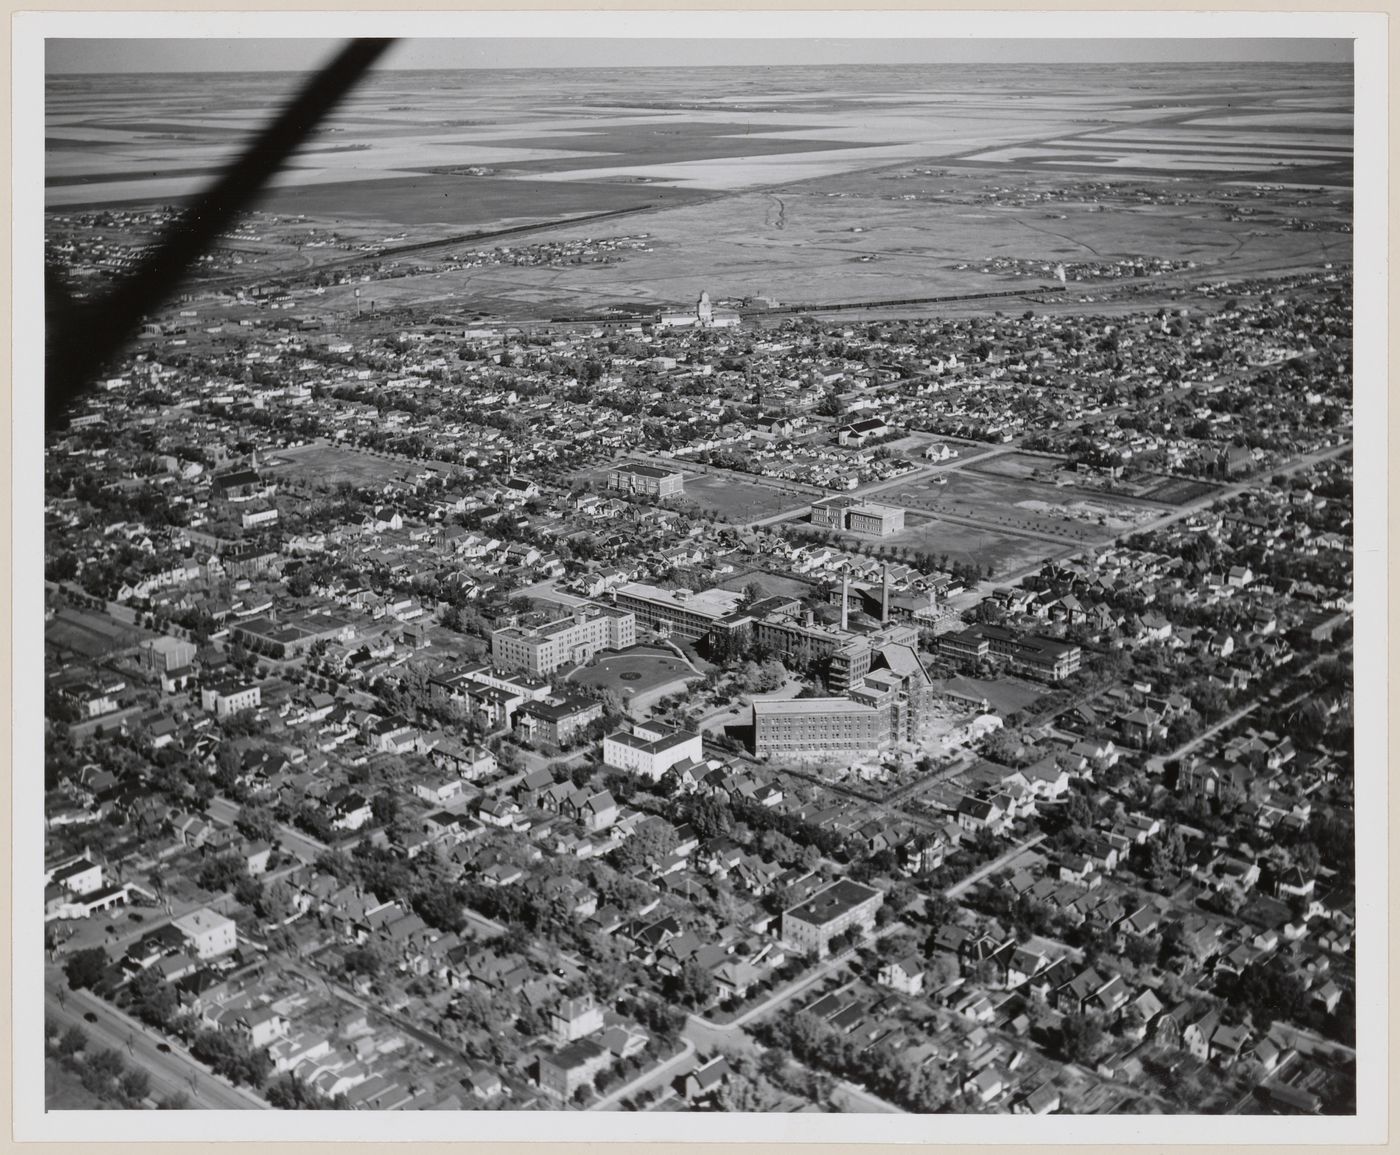 East side of city with Regina General Hospital, Regina, Saskatchewan (Photog. G.H. born here)